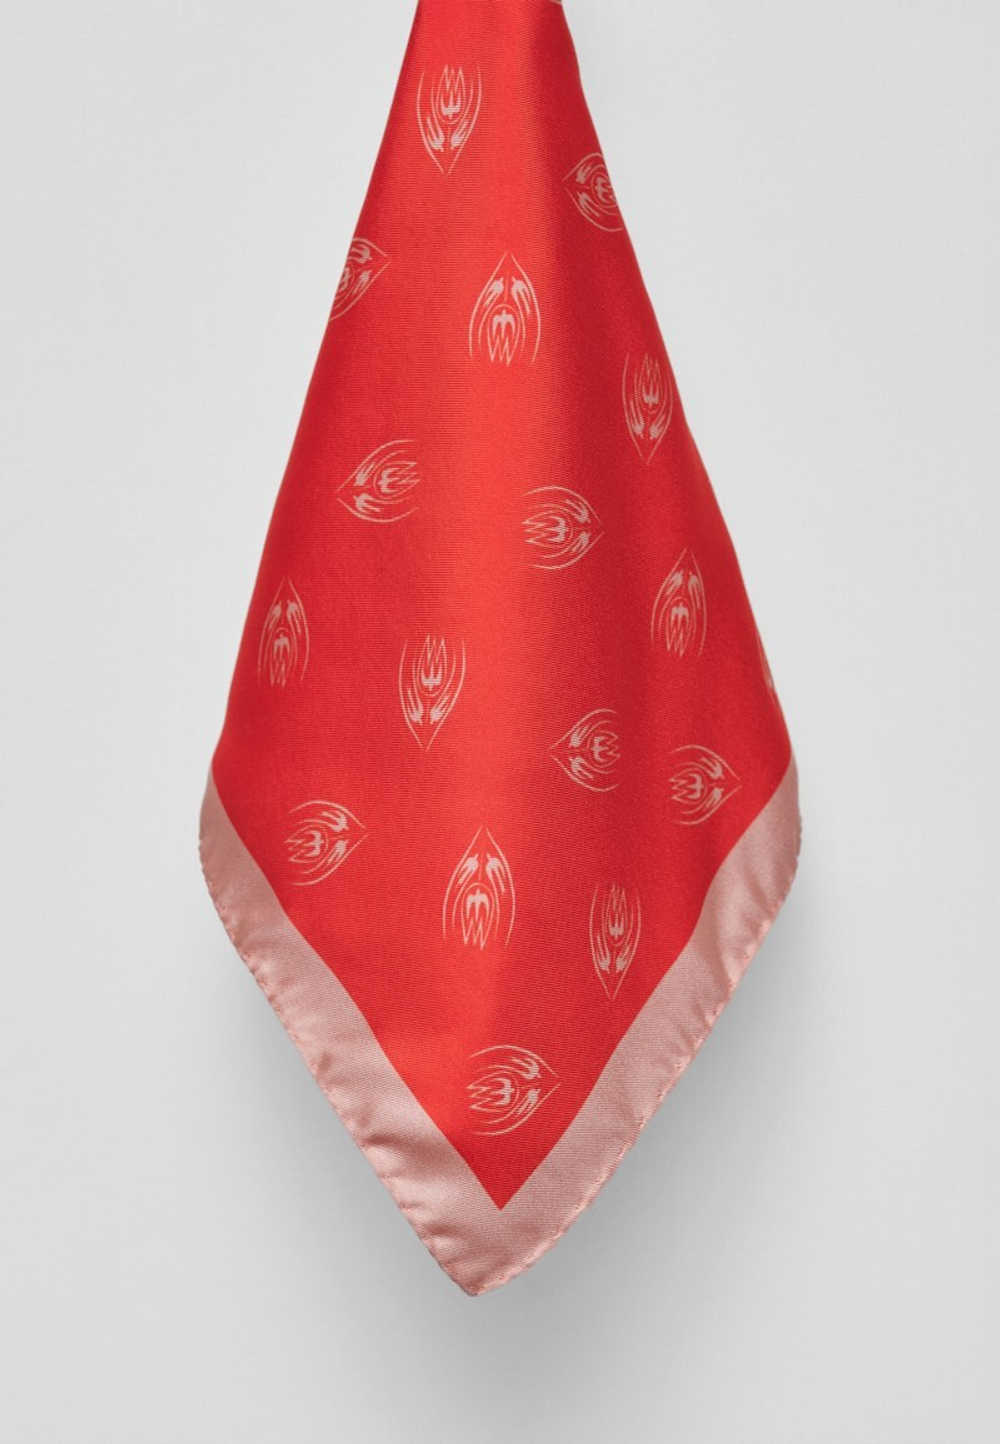 Шелковый платок Ласточка и тюльпан RED/BEIGE 45x45